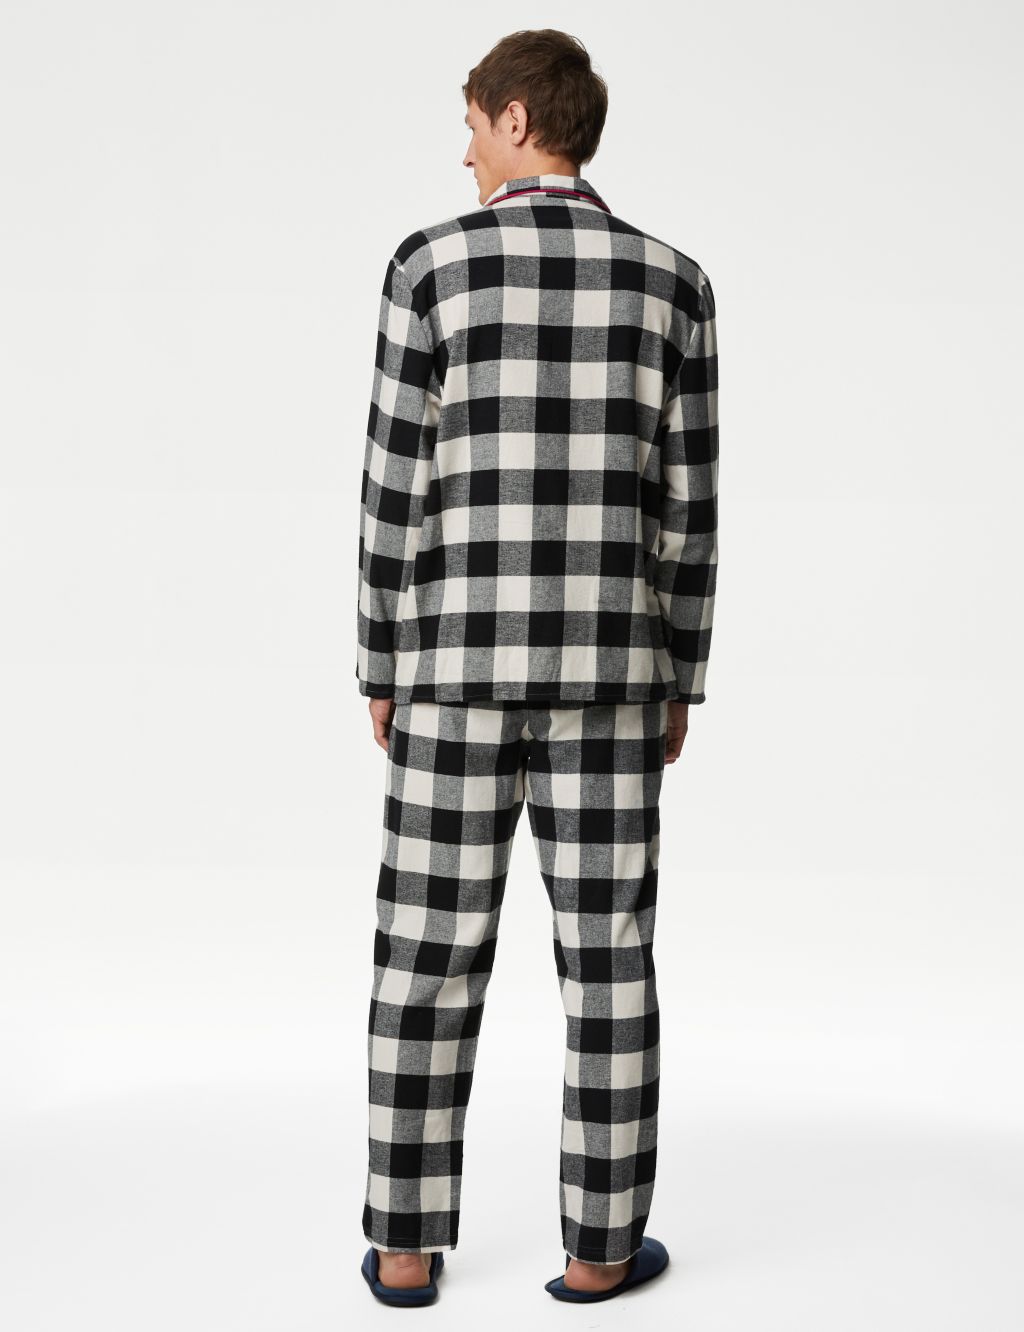 Personalised Men's Mono Check Pyjama Set image 5